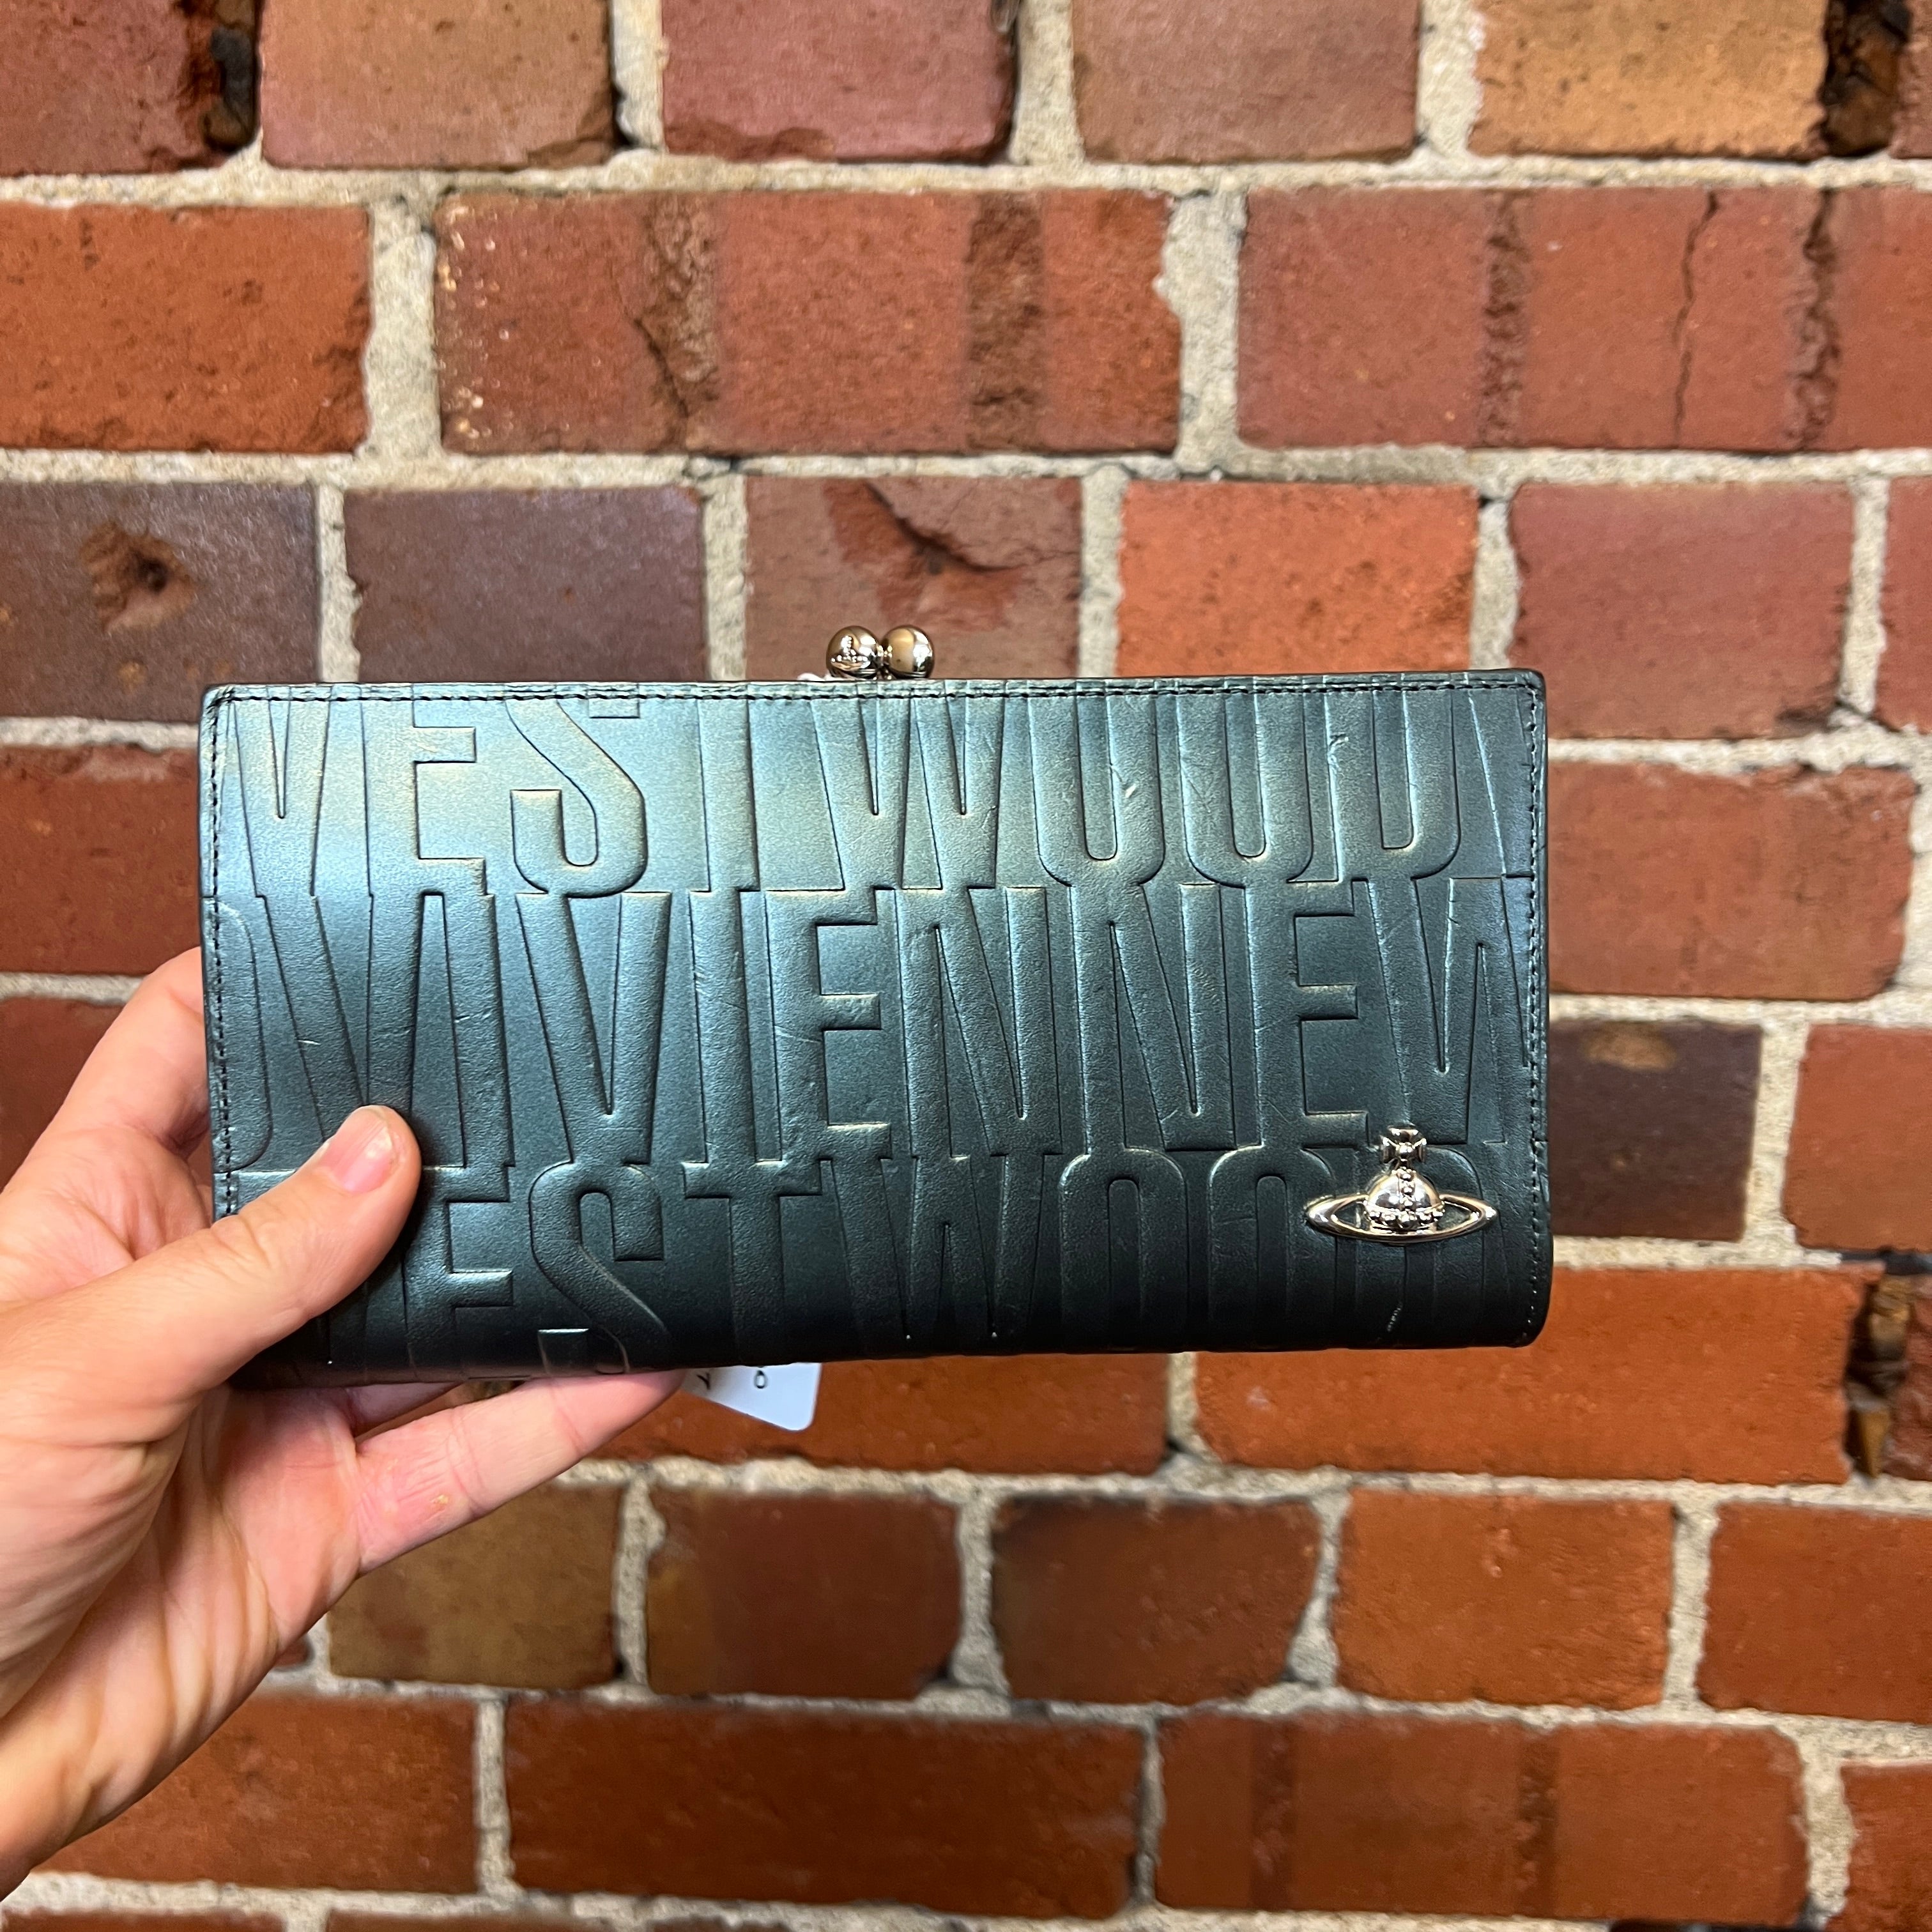 VIVIENNE WESTWOOD leather wallet